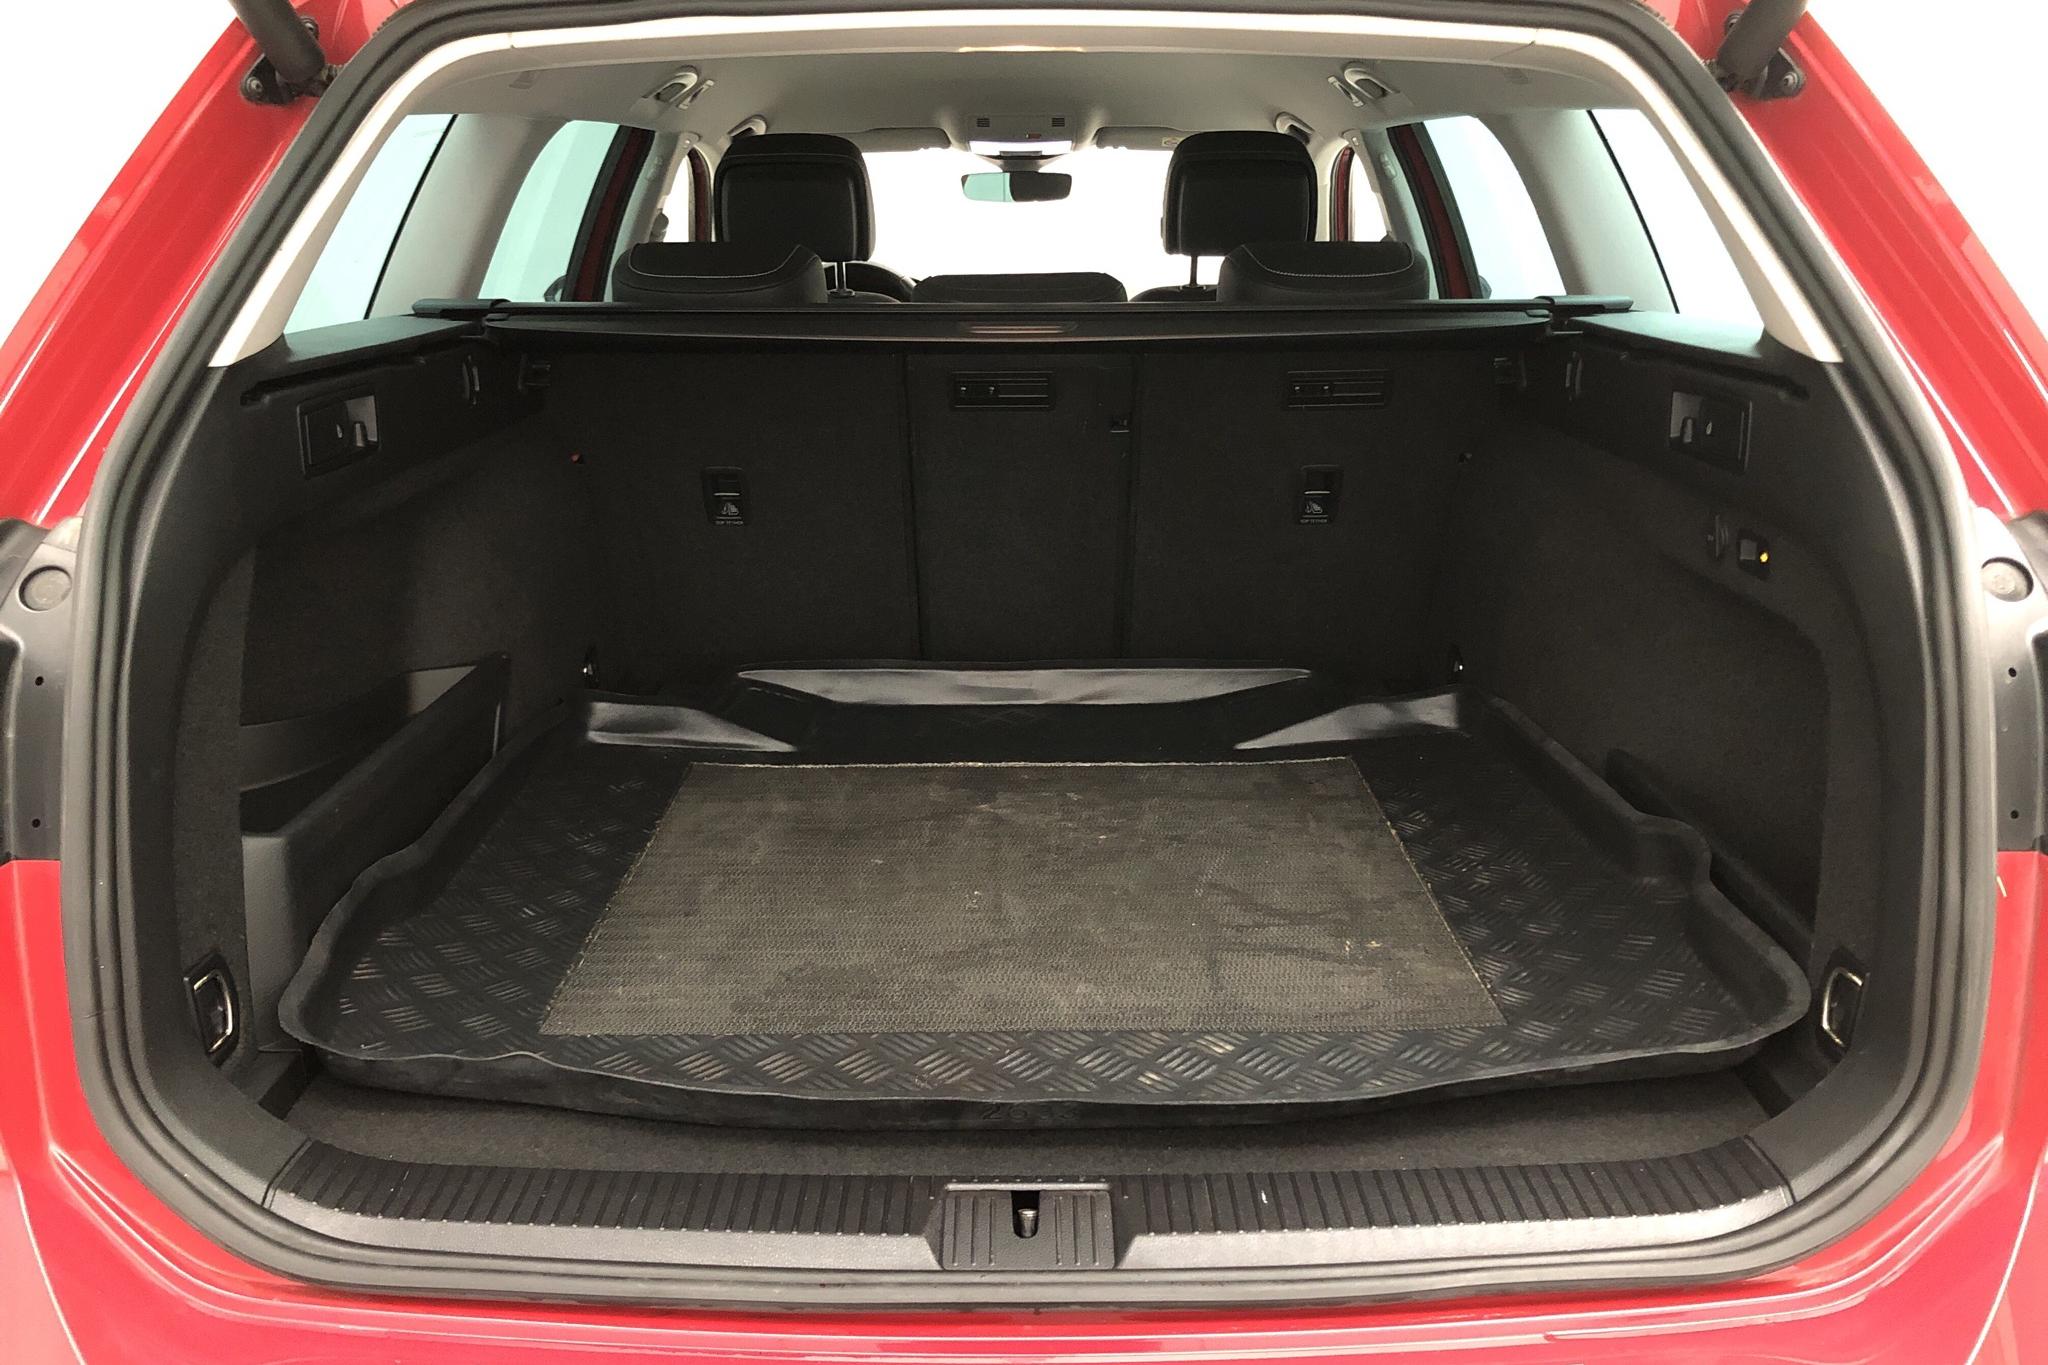 VW Passat 1.4 GTE Sportscombi (218hk) - 12 918 mil - Automat - röd - 2020